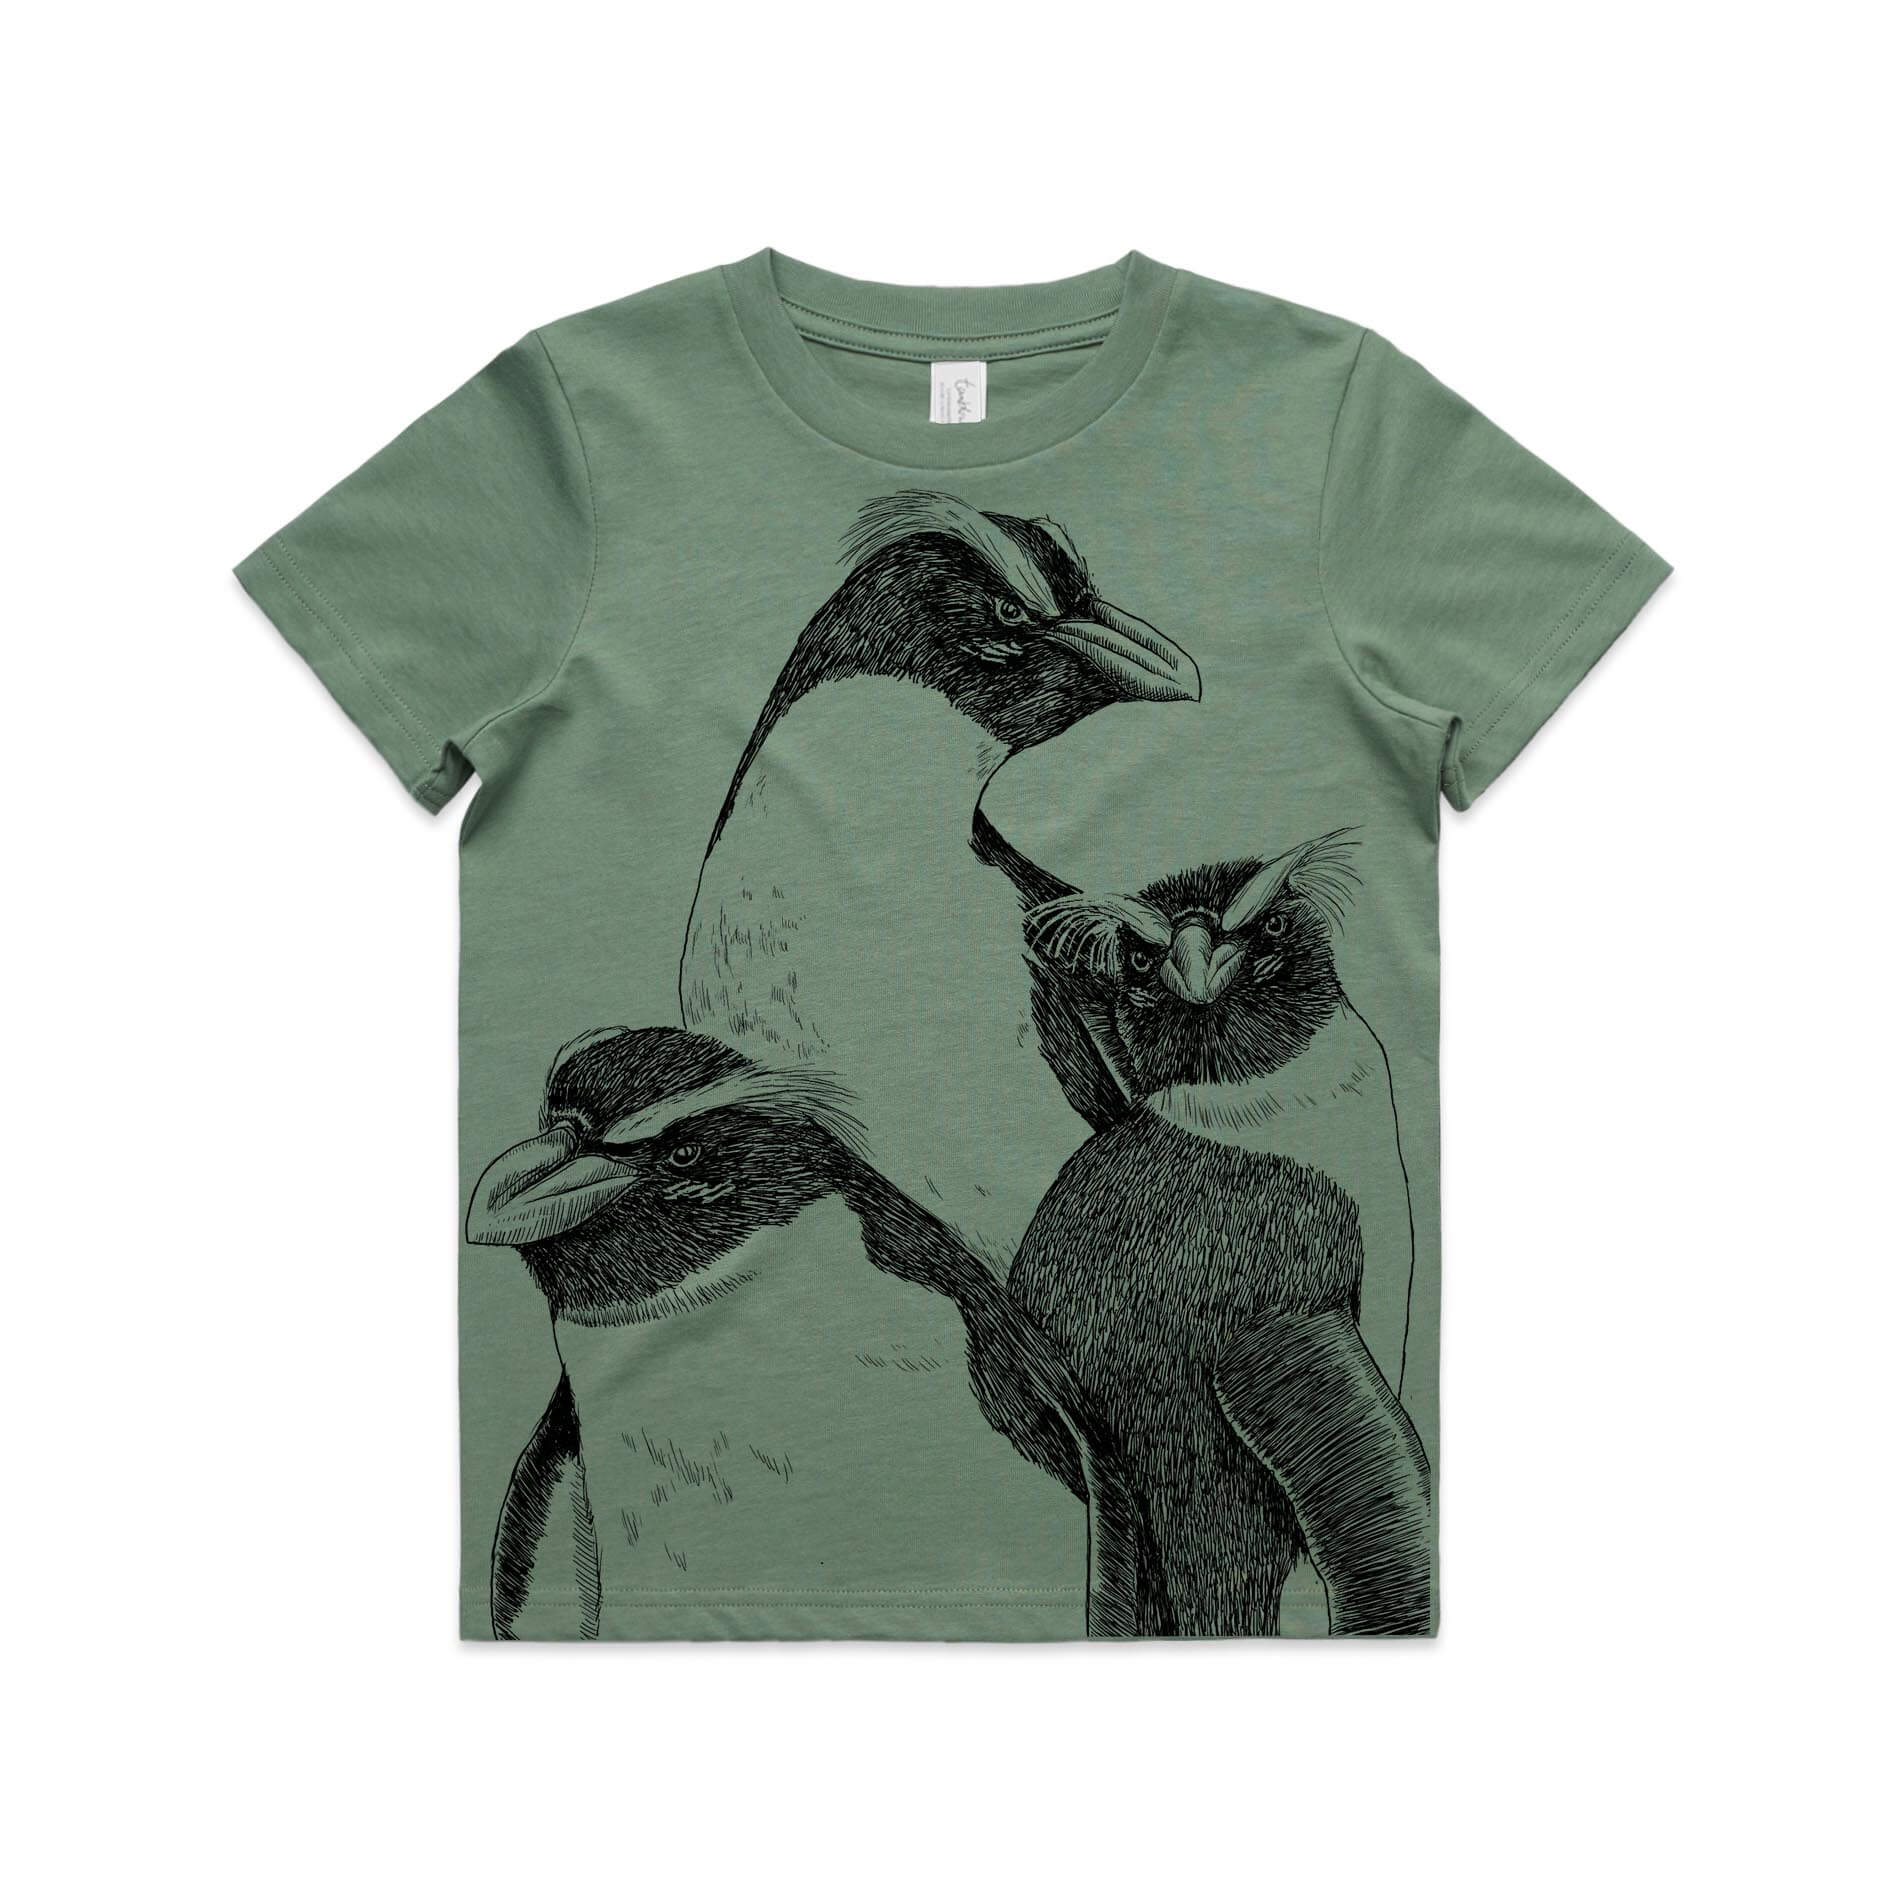 Sage, cotton kids' t-shirt with screen printed Kids tawaki/fiordland crested penguin design.